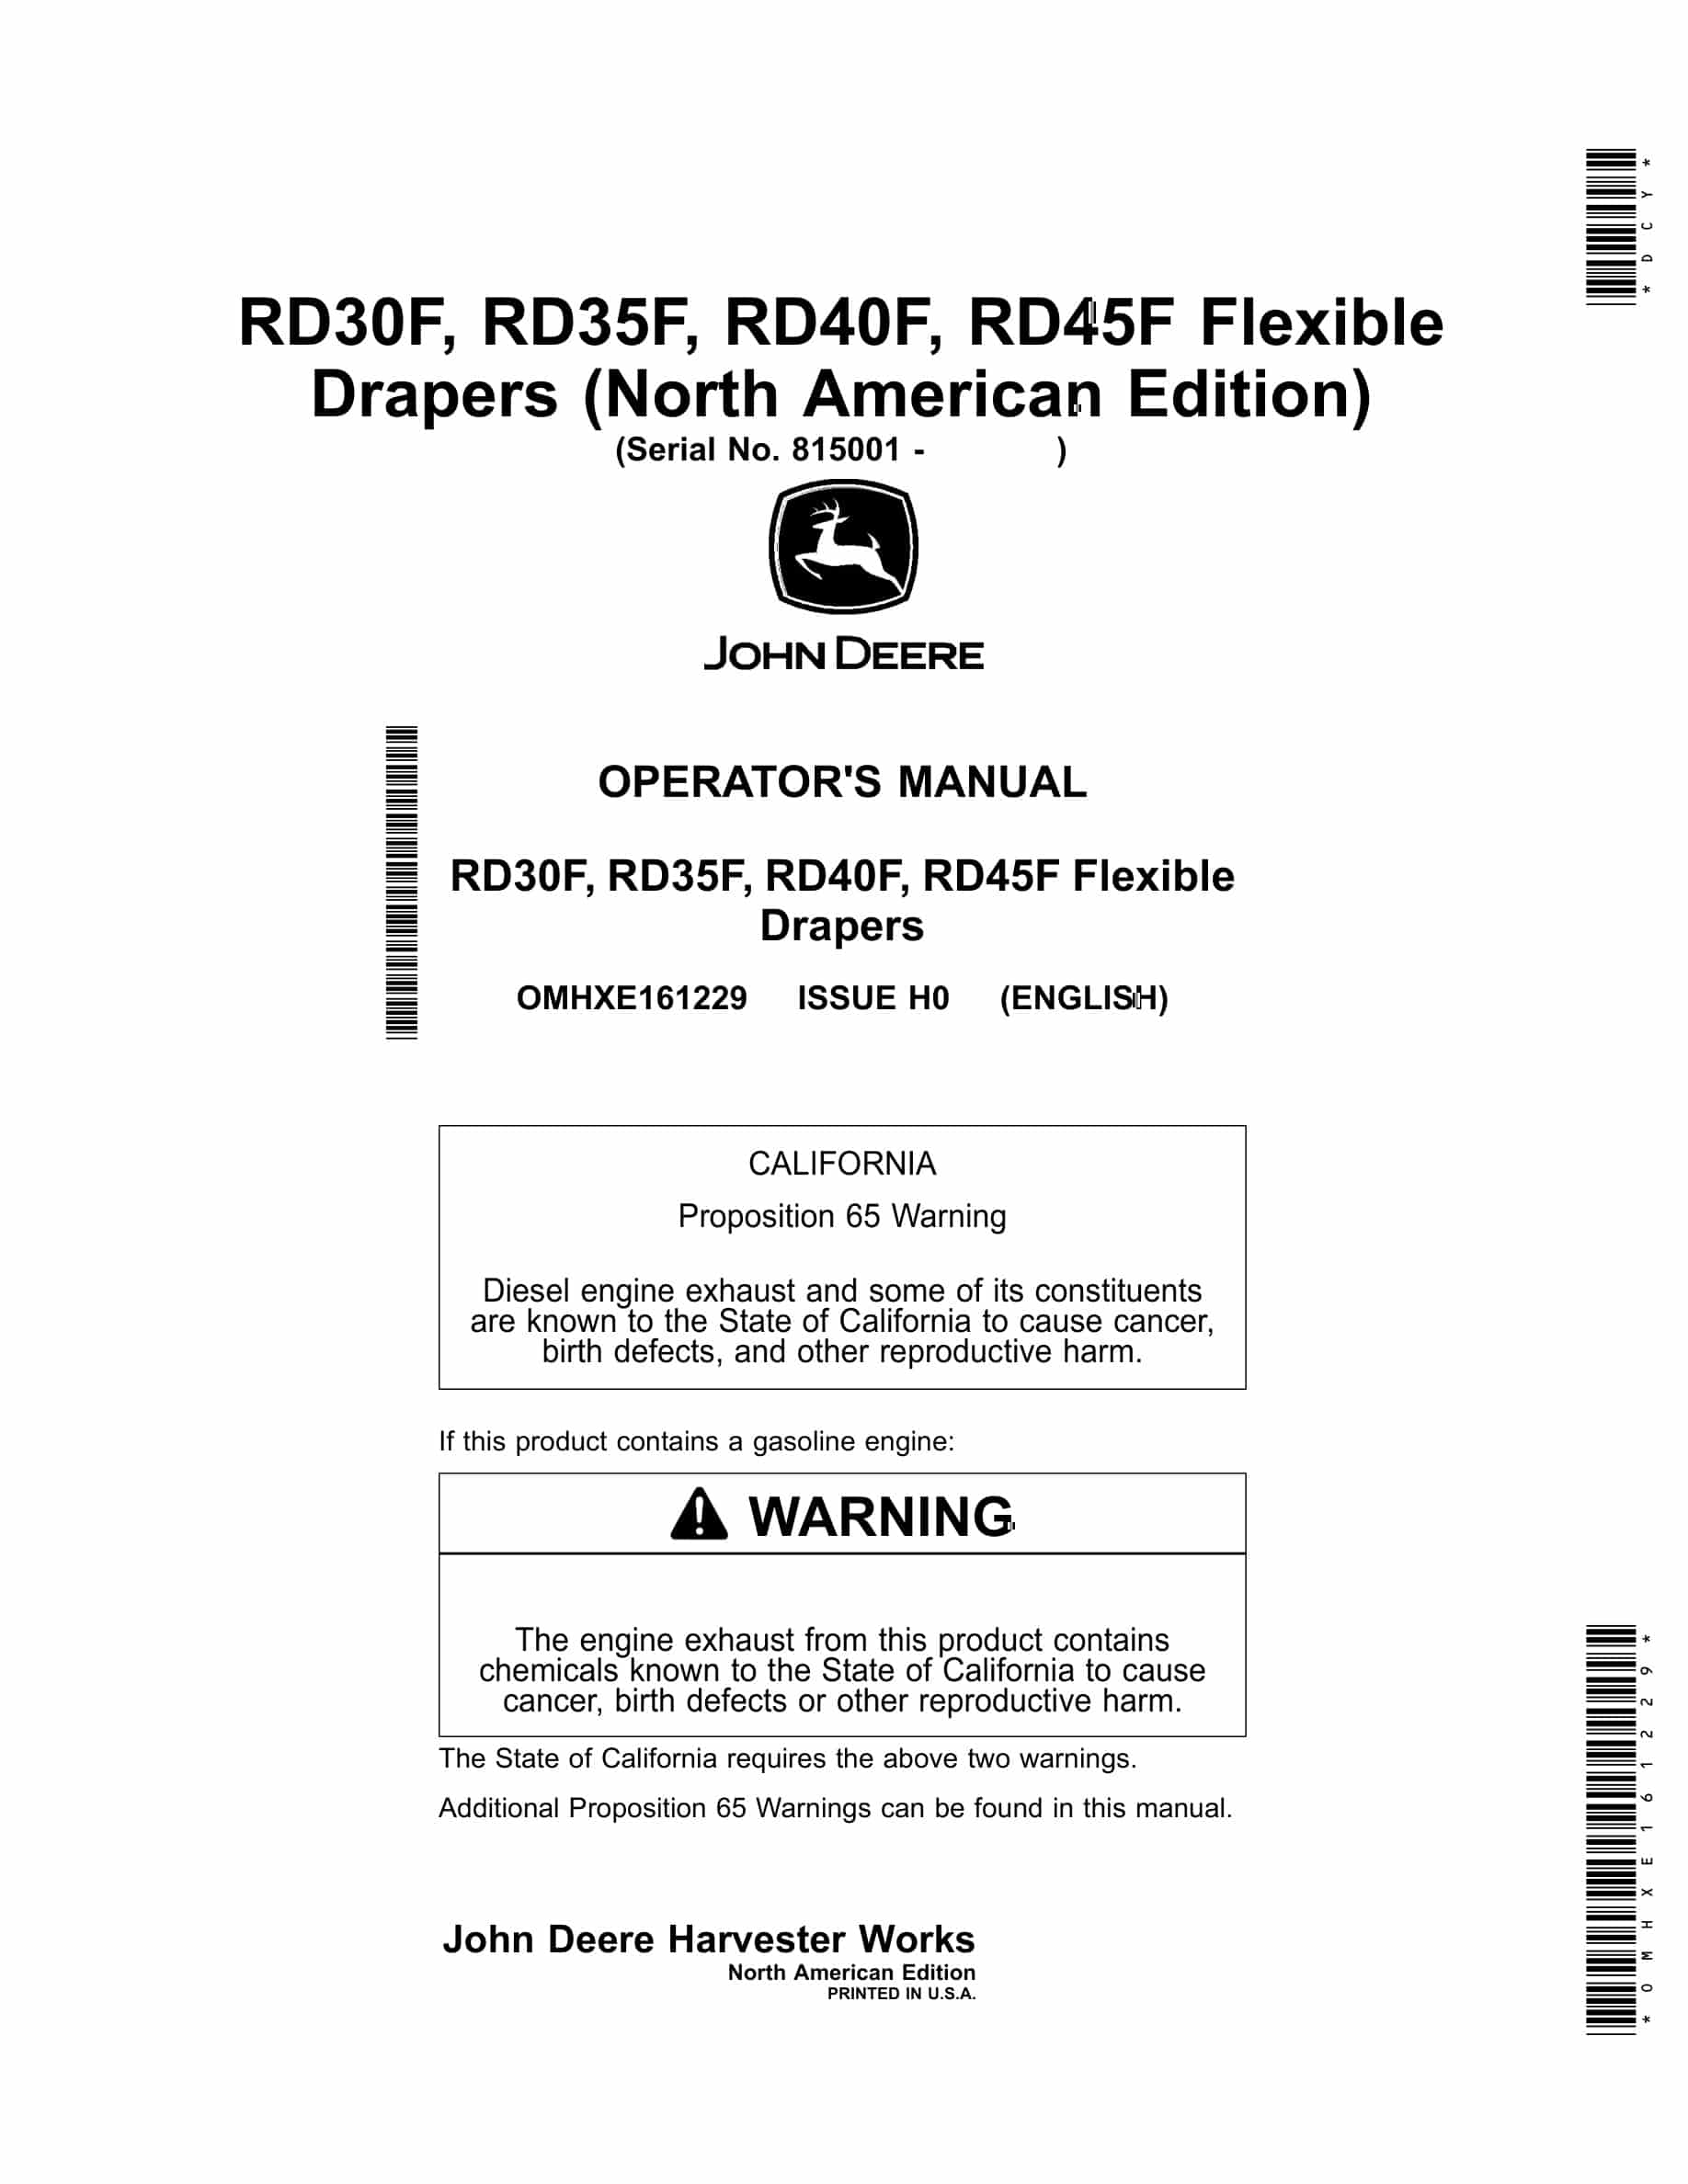 John Deere RD30F, RD35F, RD40F, RD45F Flexible Drapers Operator Manual OMHXE161229-1